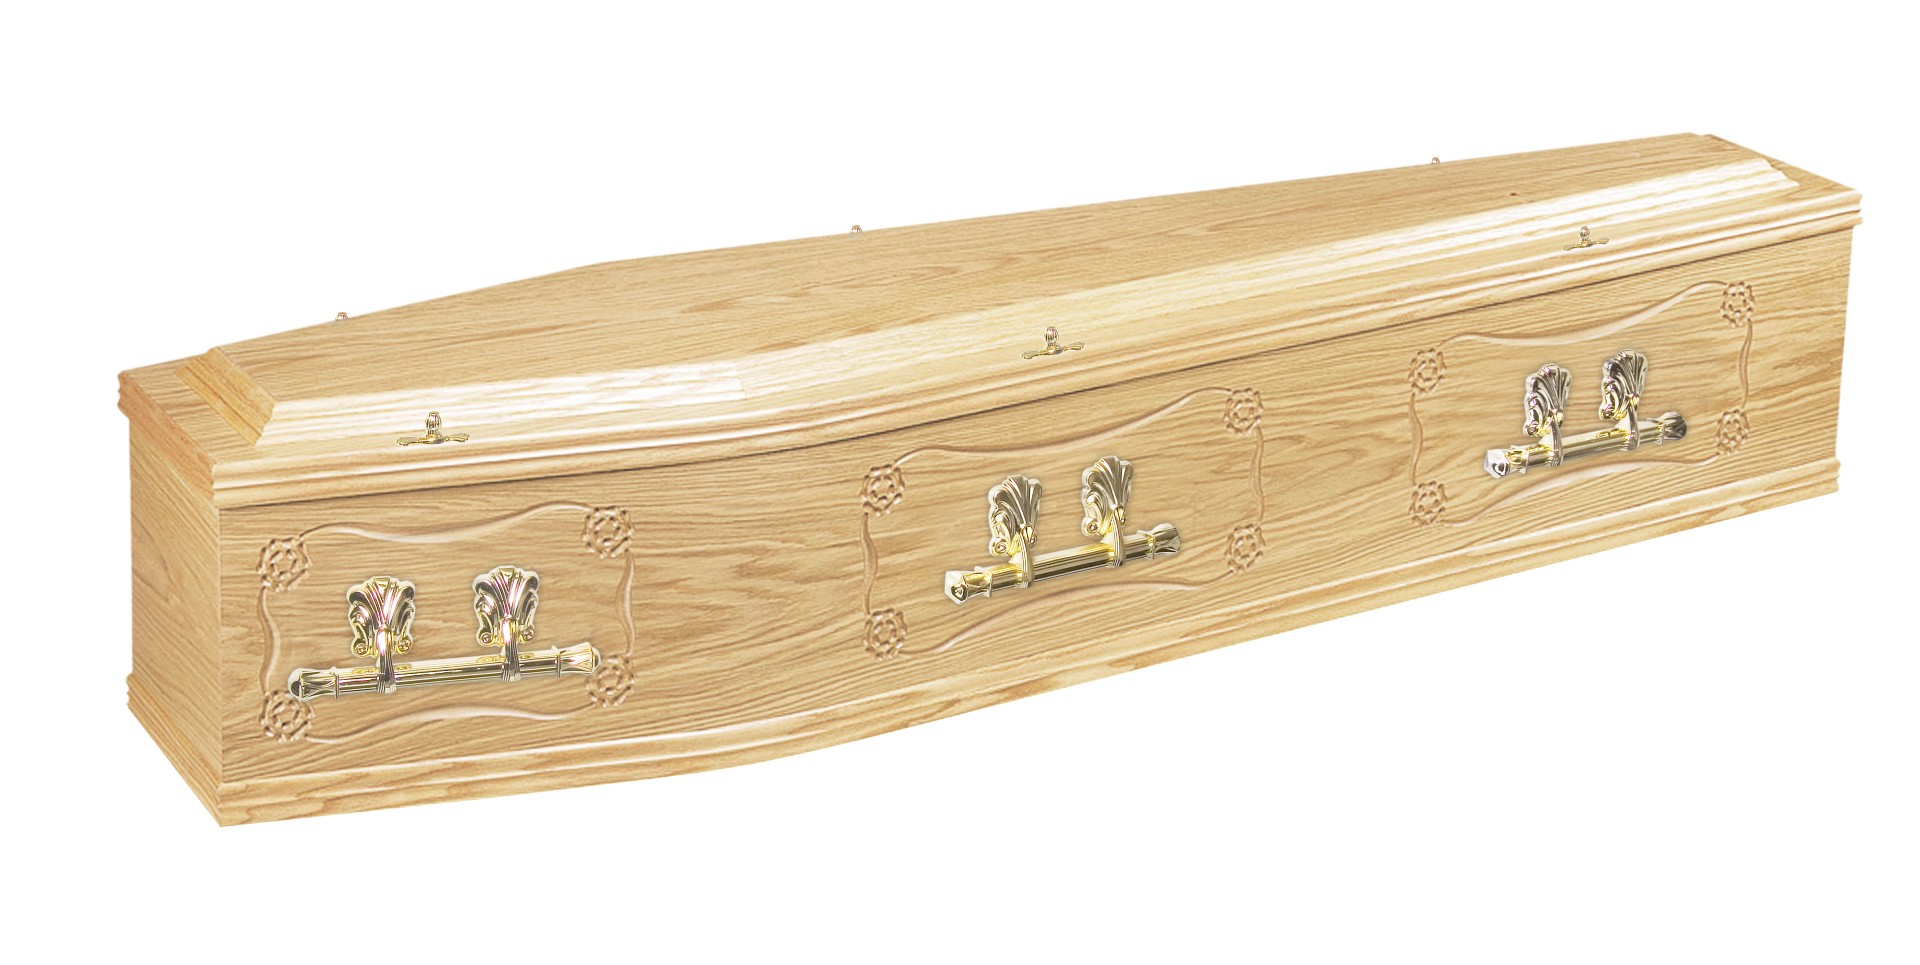 tudor rose wood coffin - funeral director Hemel Hempstead & north london